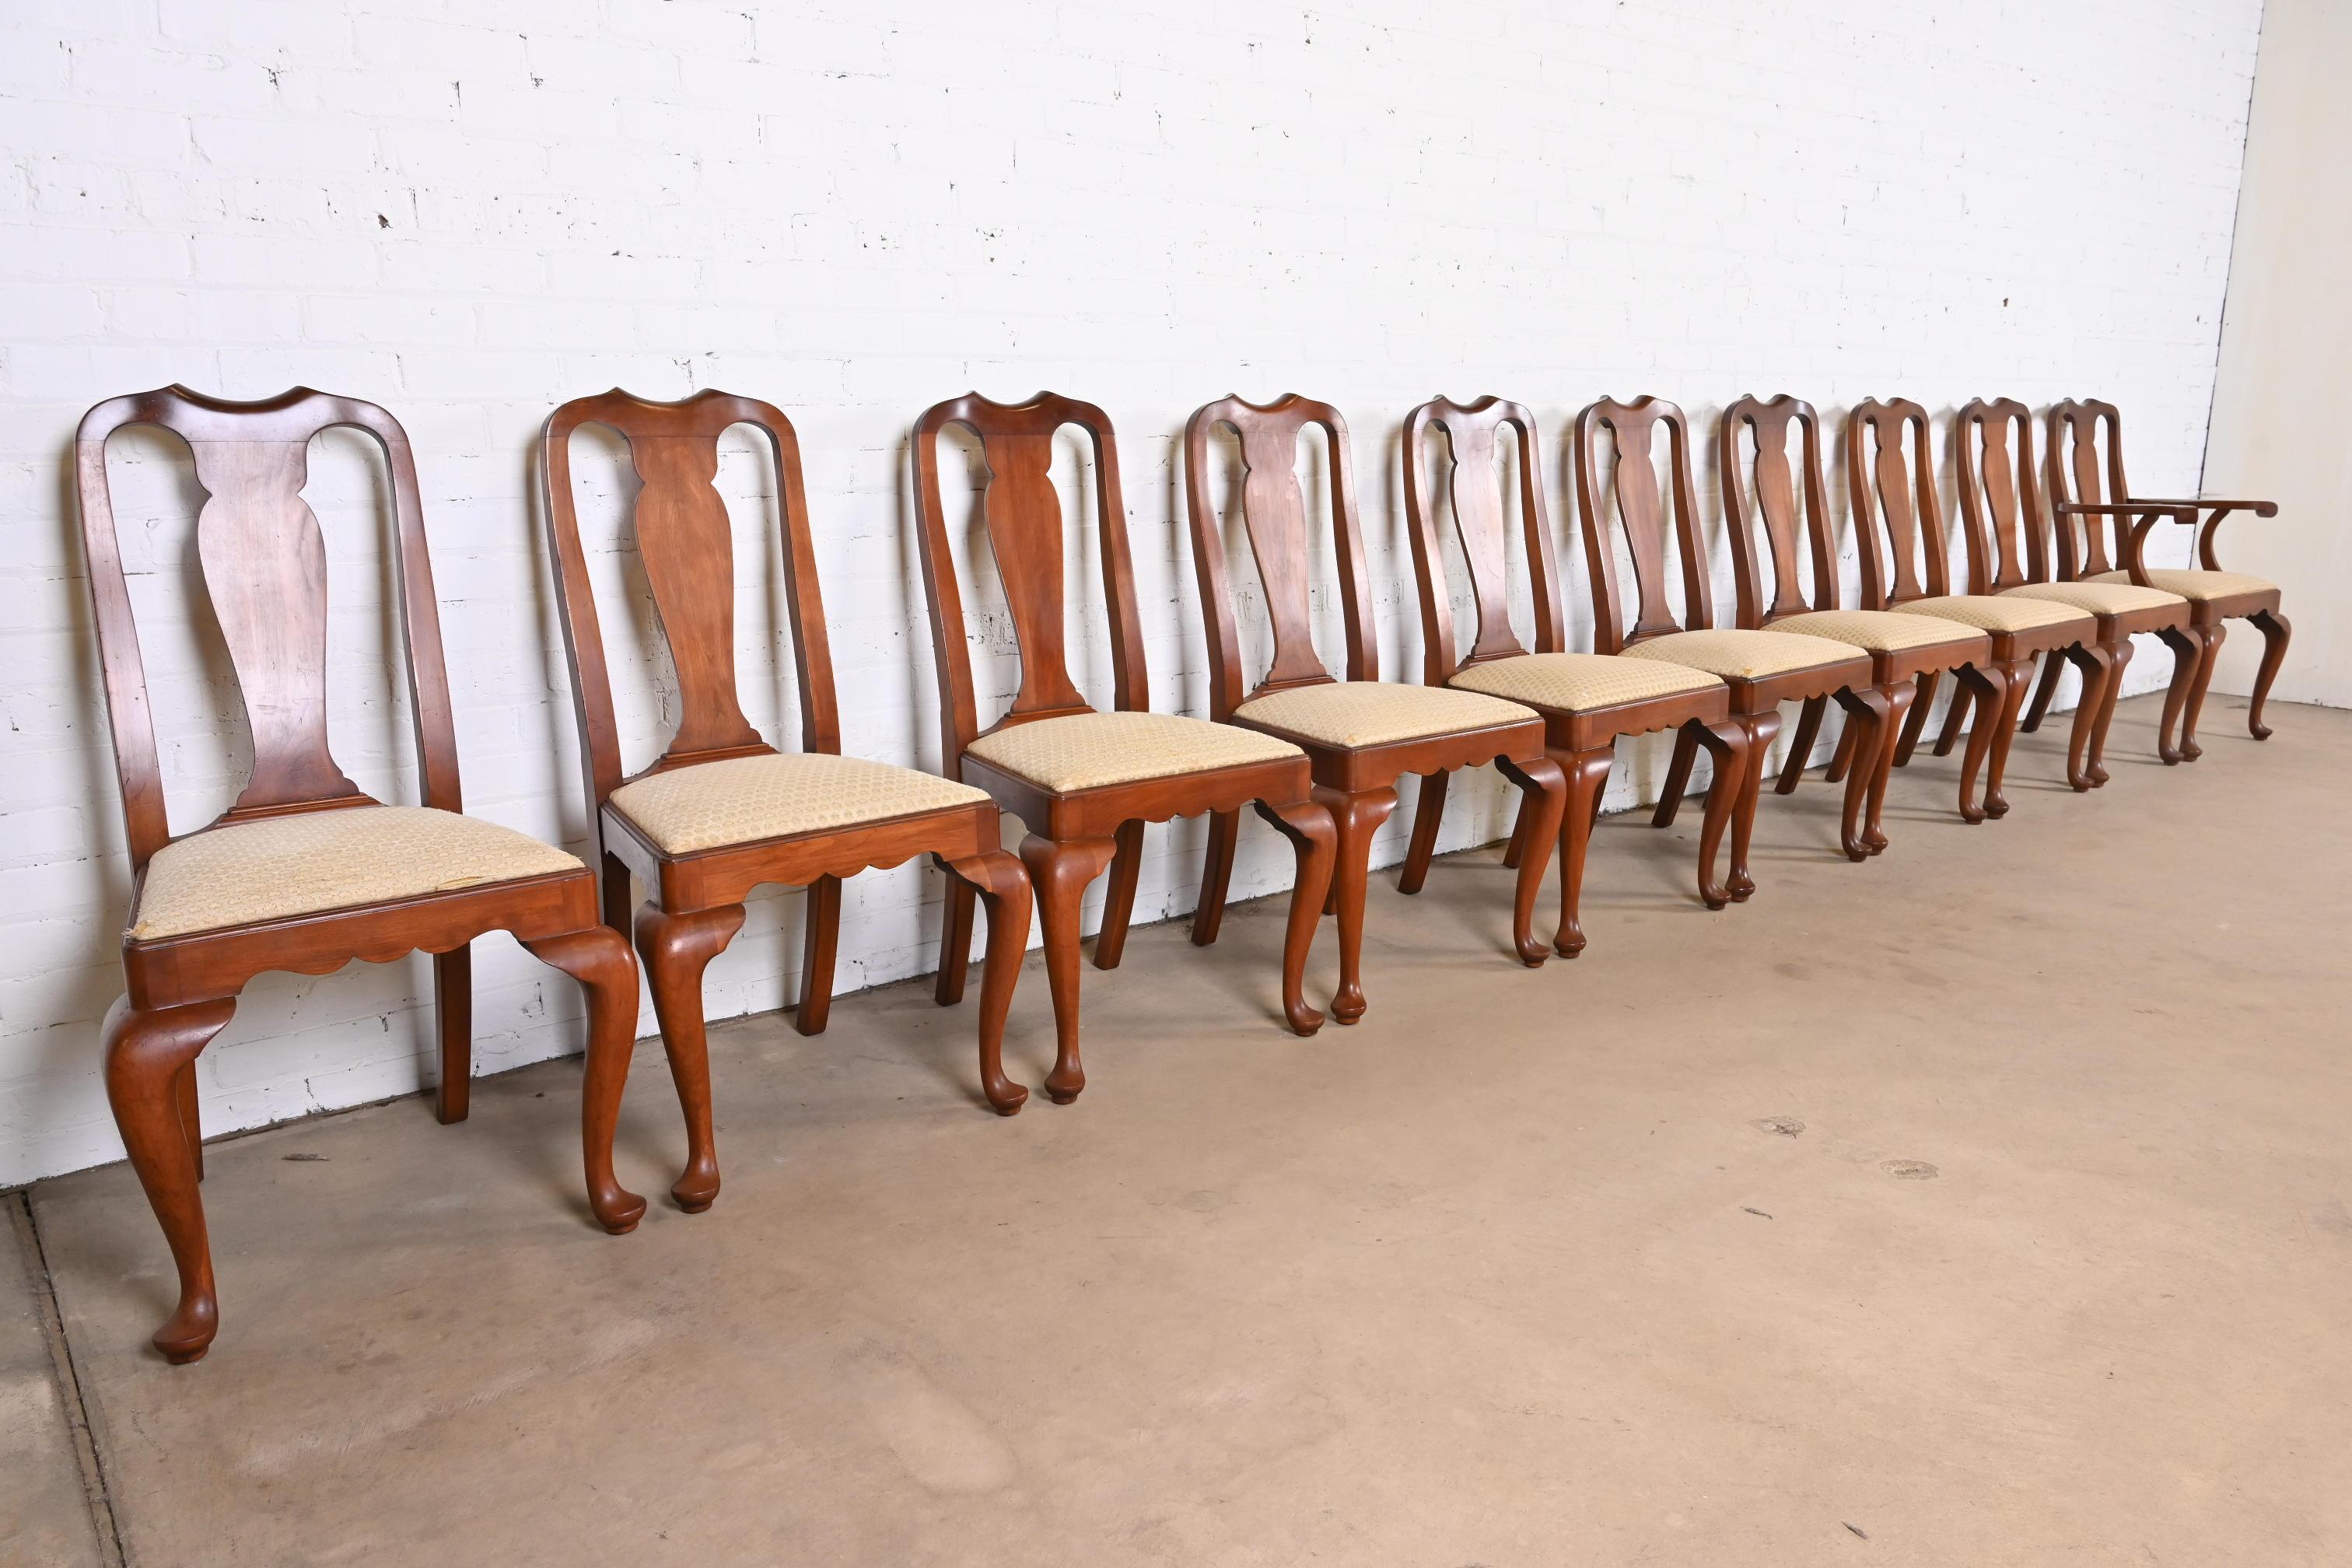 20th Century Henkel Harris Queen Anne Solid Cherry Wood Dining Chairs, Set of Ten